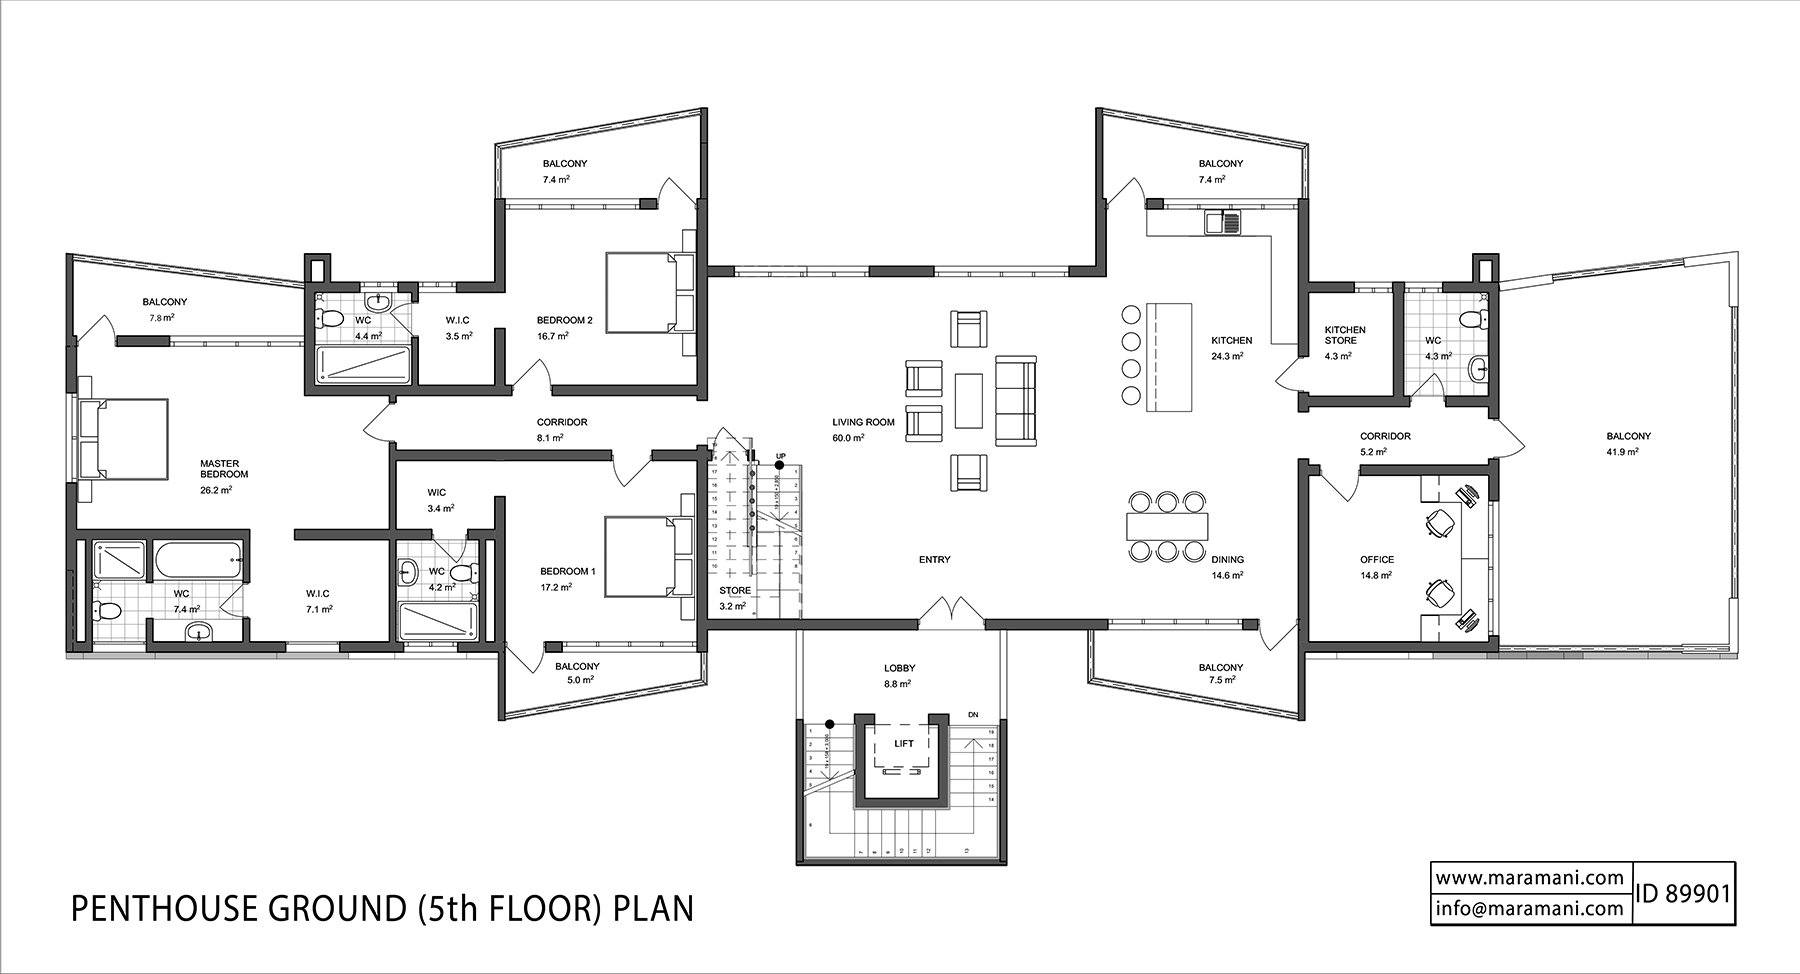 12 flat apartment block - ID 89901